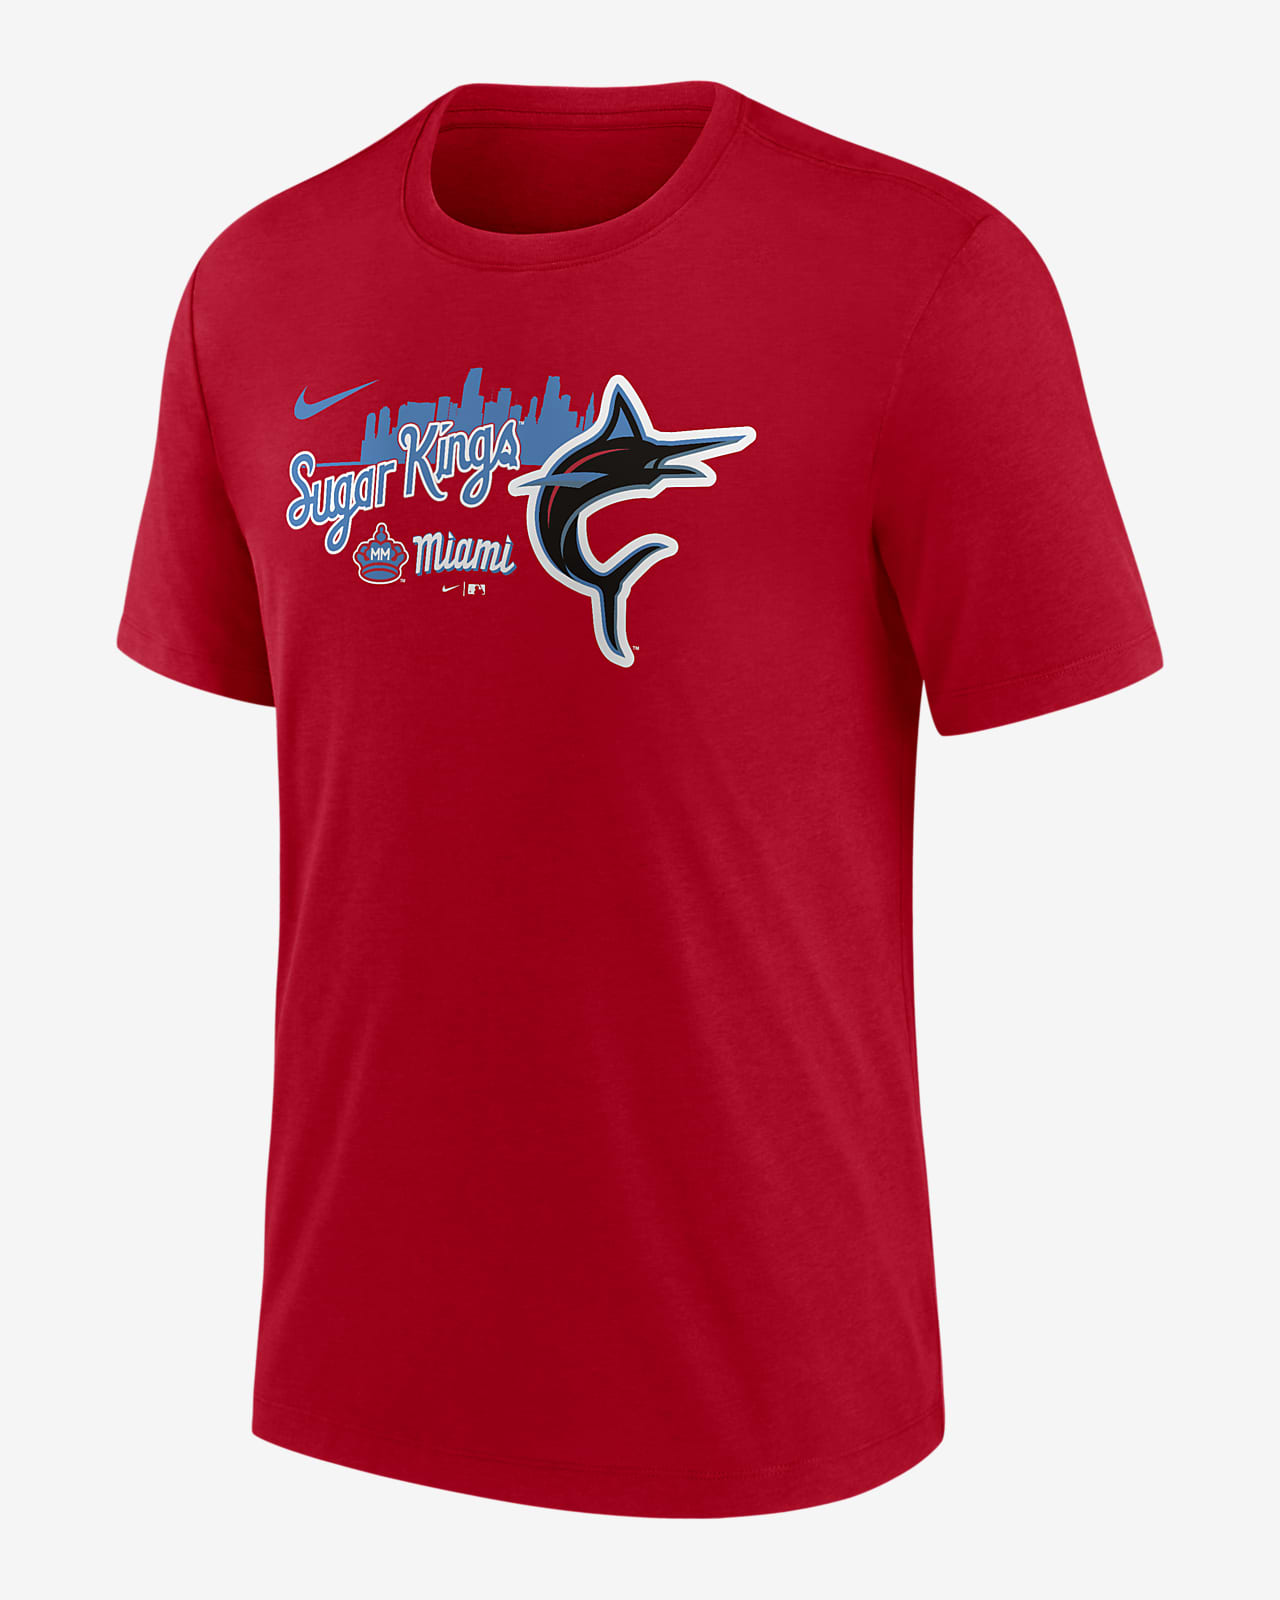 Nike Marlins Team T-Shirt - Men's